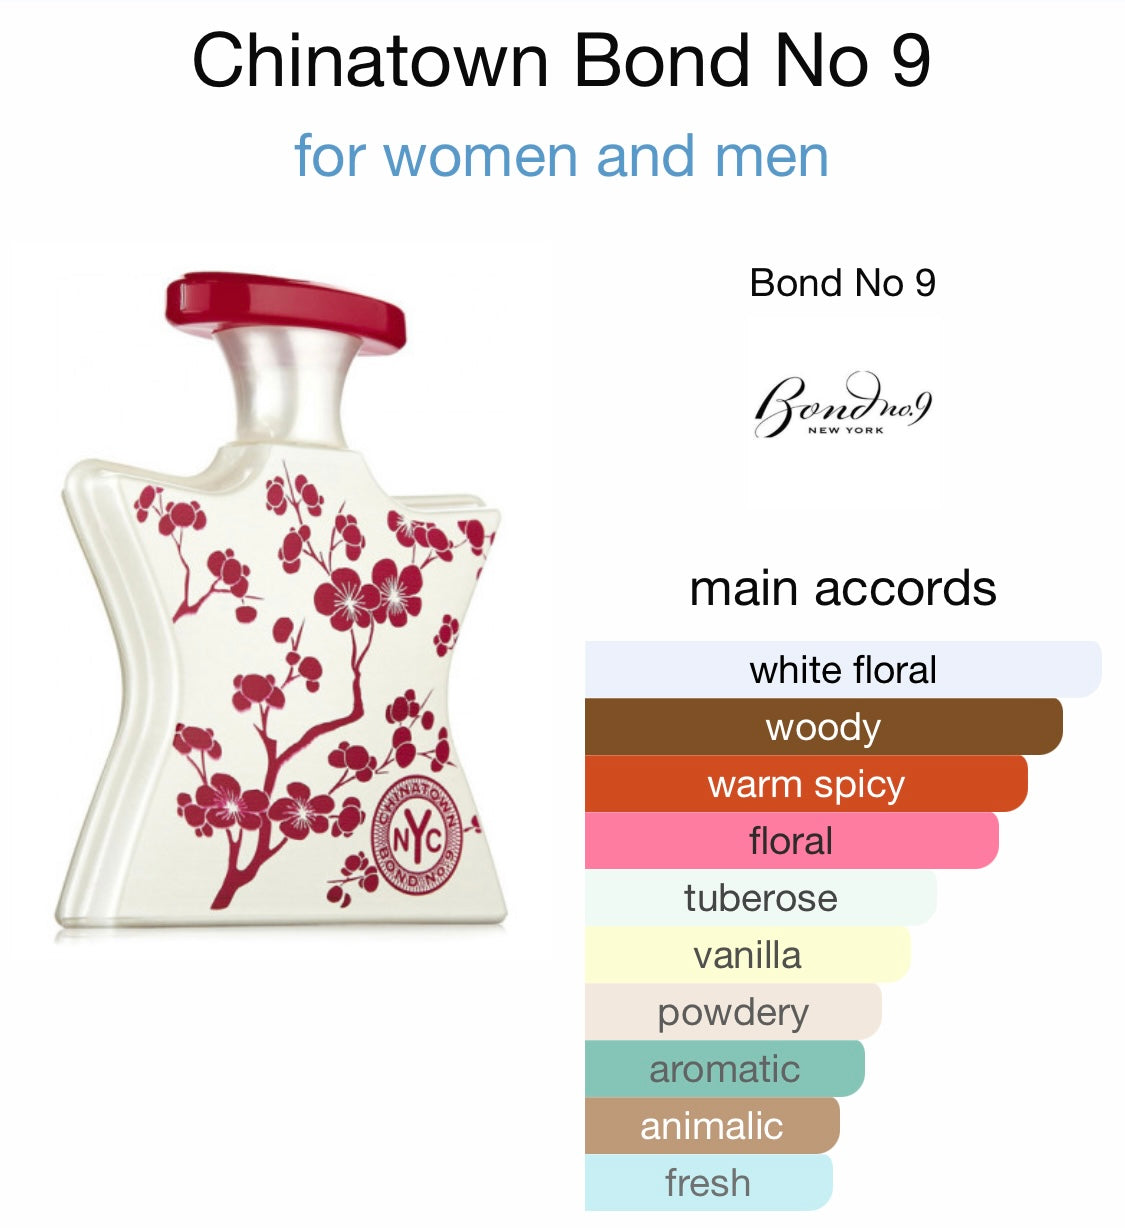 Bond No. 9 - Chinatown